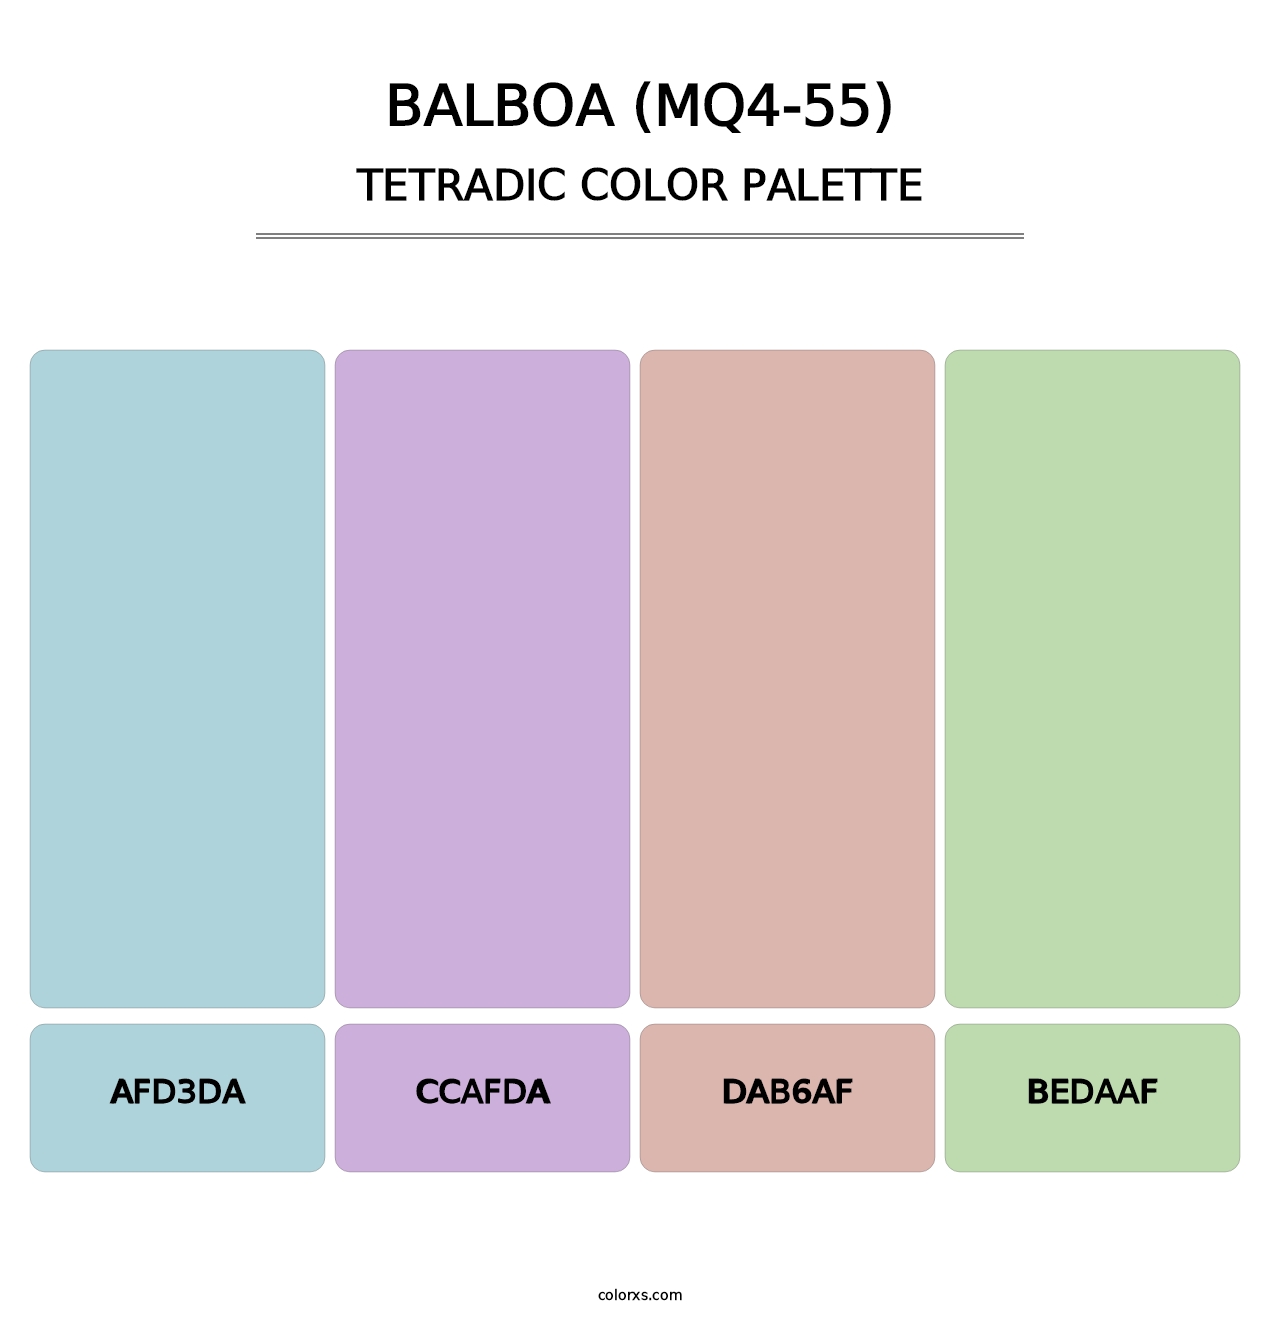 Balboa (MQ4-55) - Tetradic Color Palette